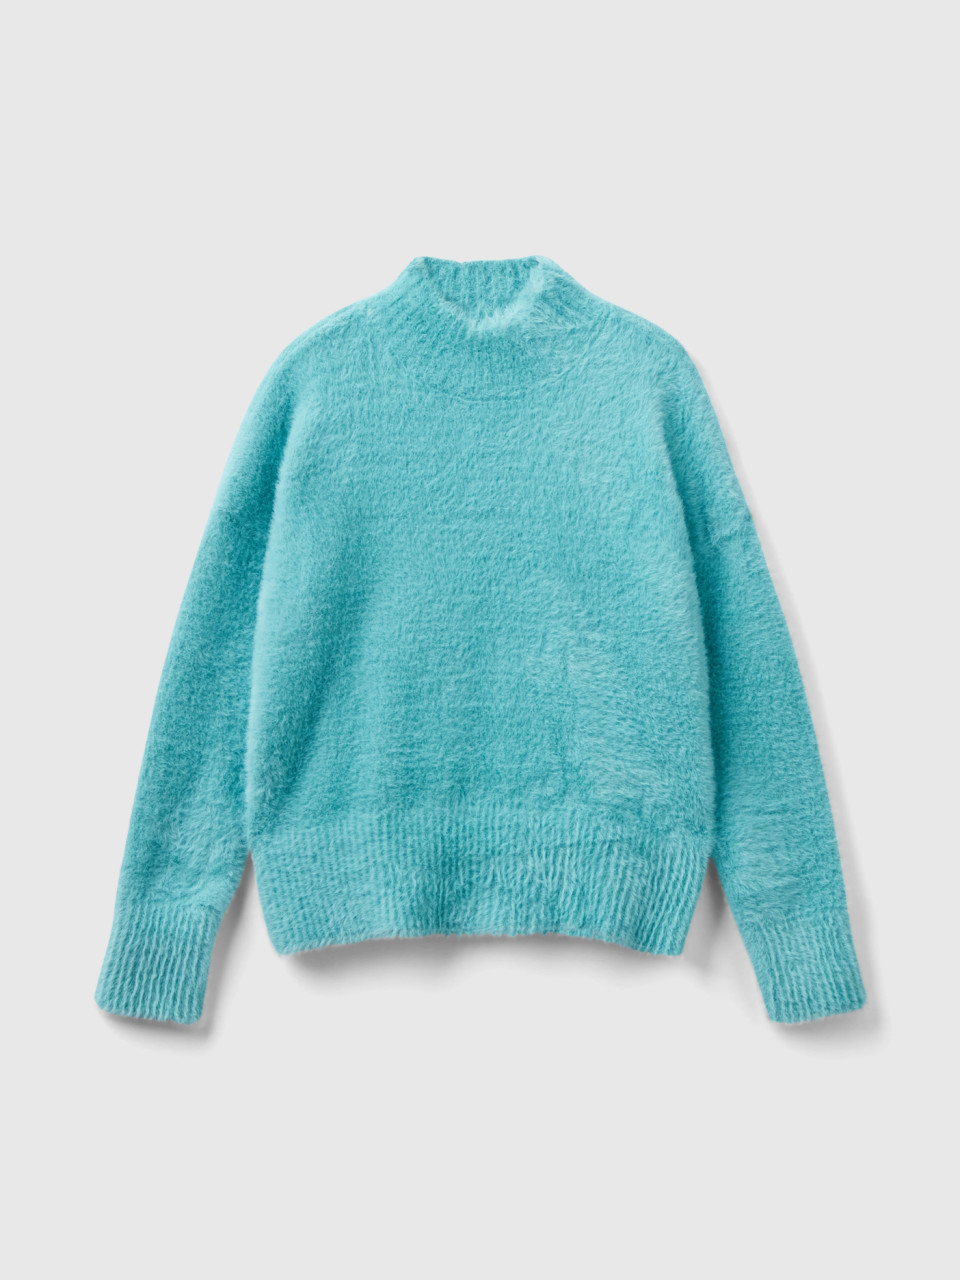 Benetton, Furry Yarn Turtleneck Sweater, Light Blue, Kids